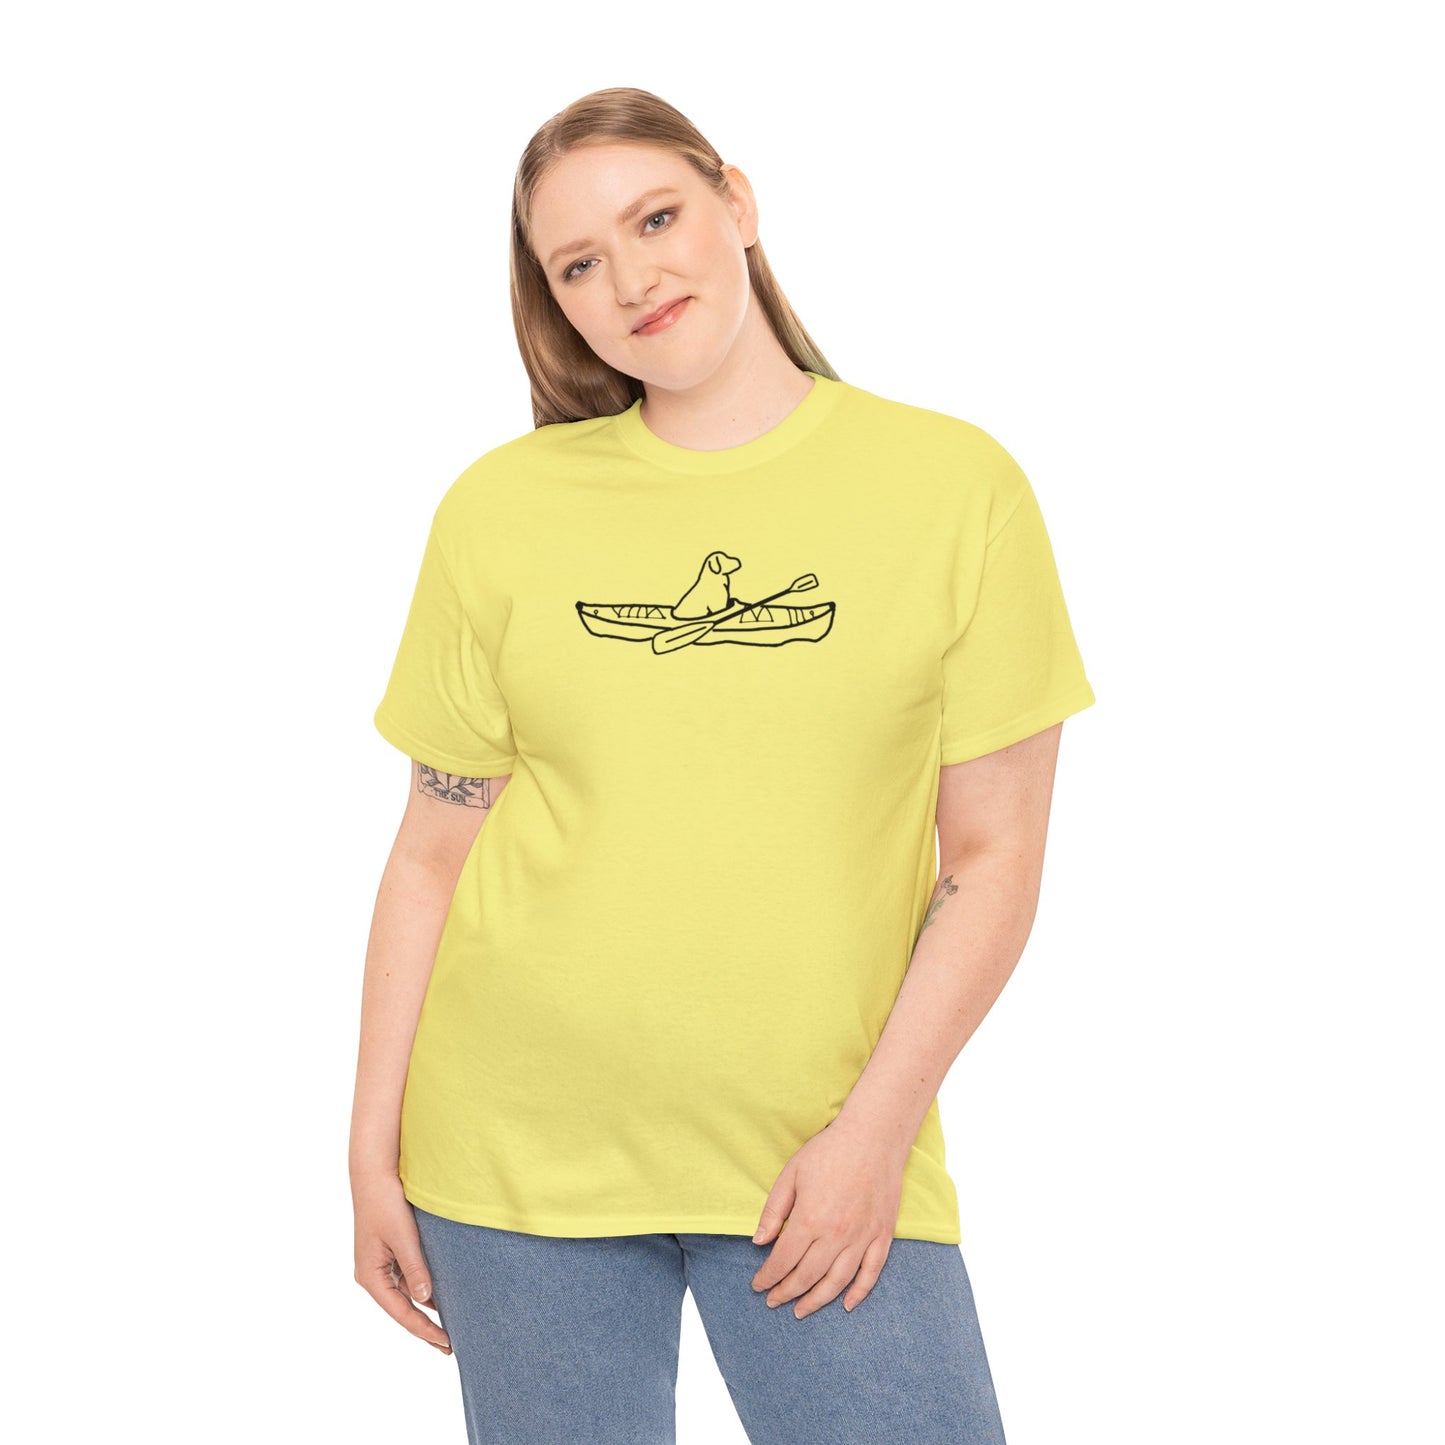 Unisex Heavy Tee Shirt - Kayak Dog